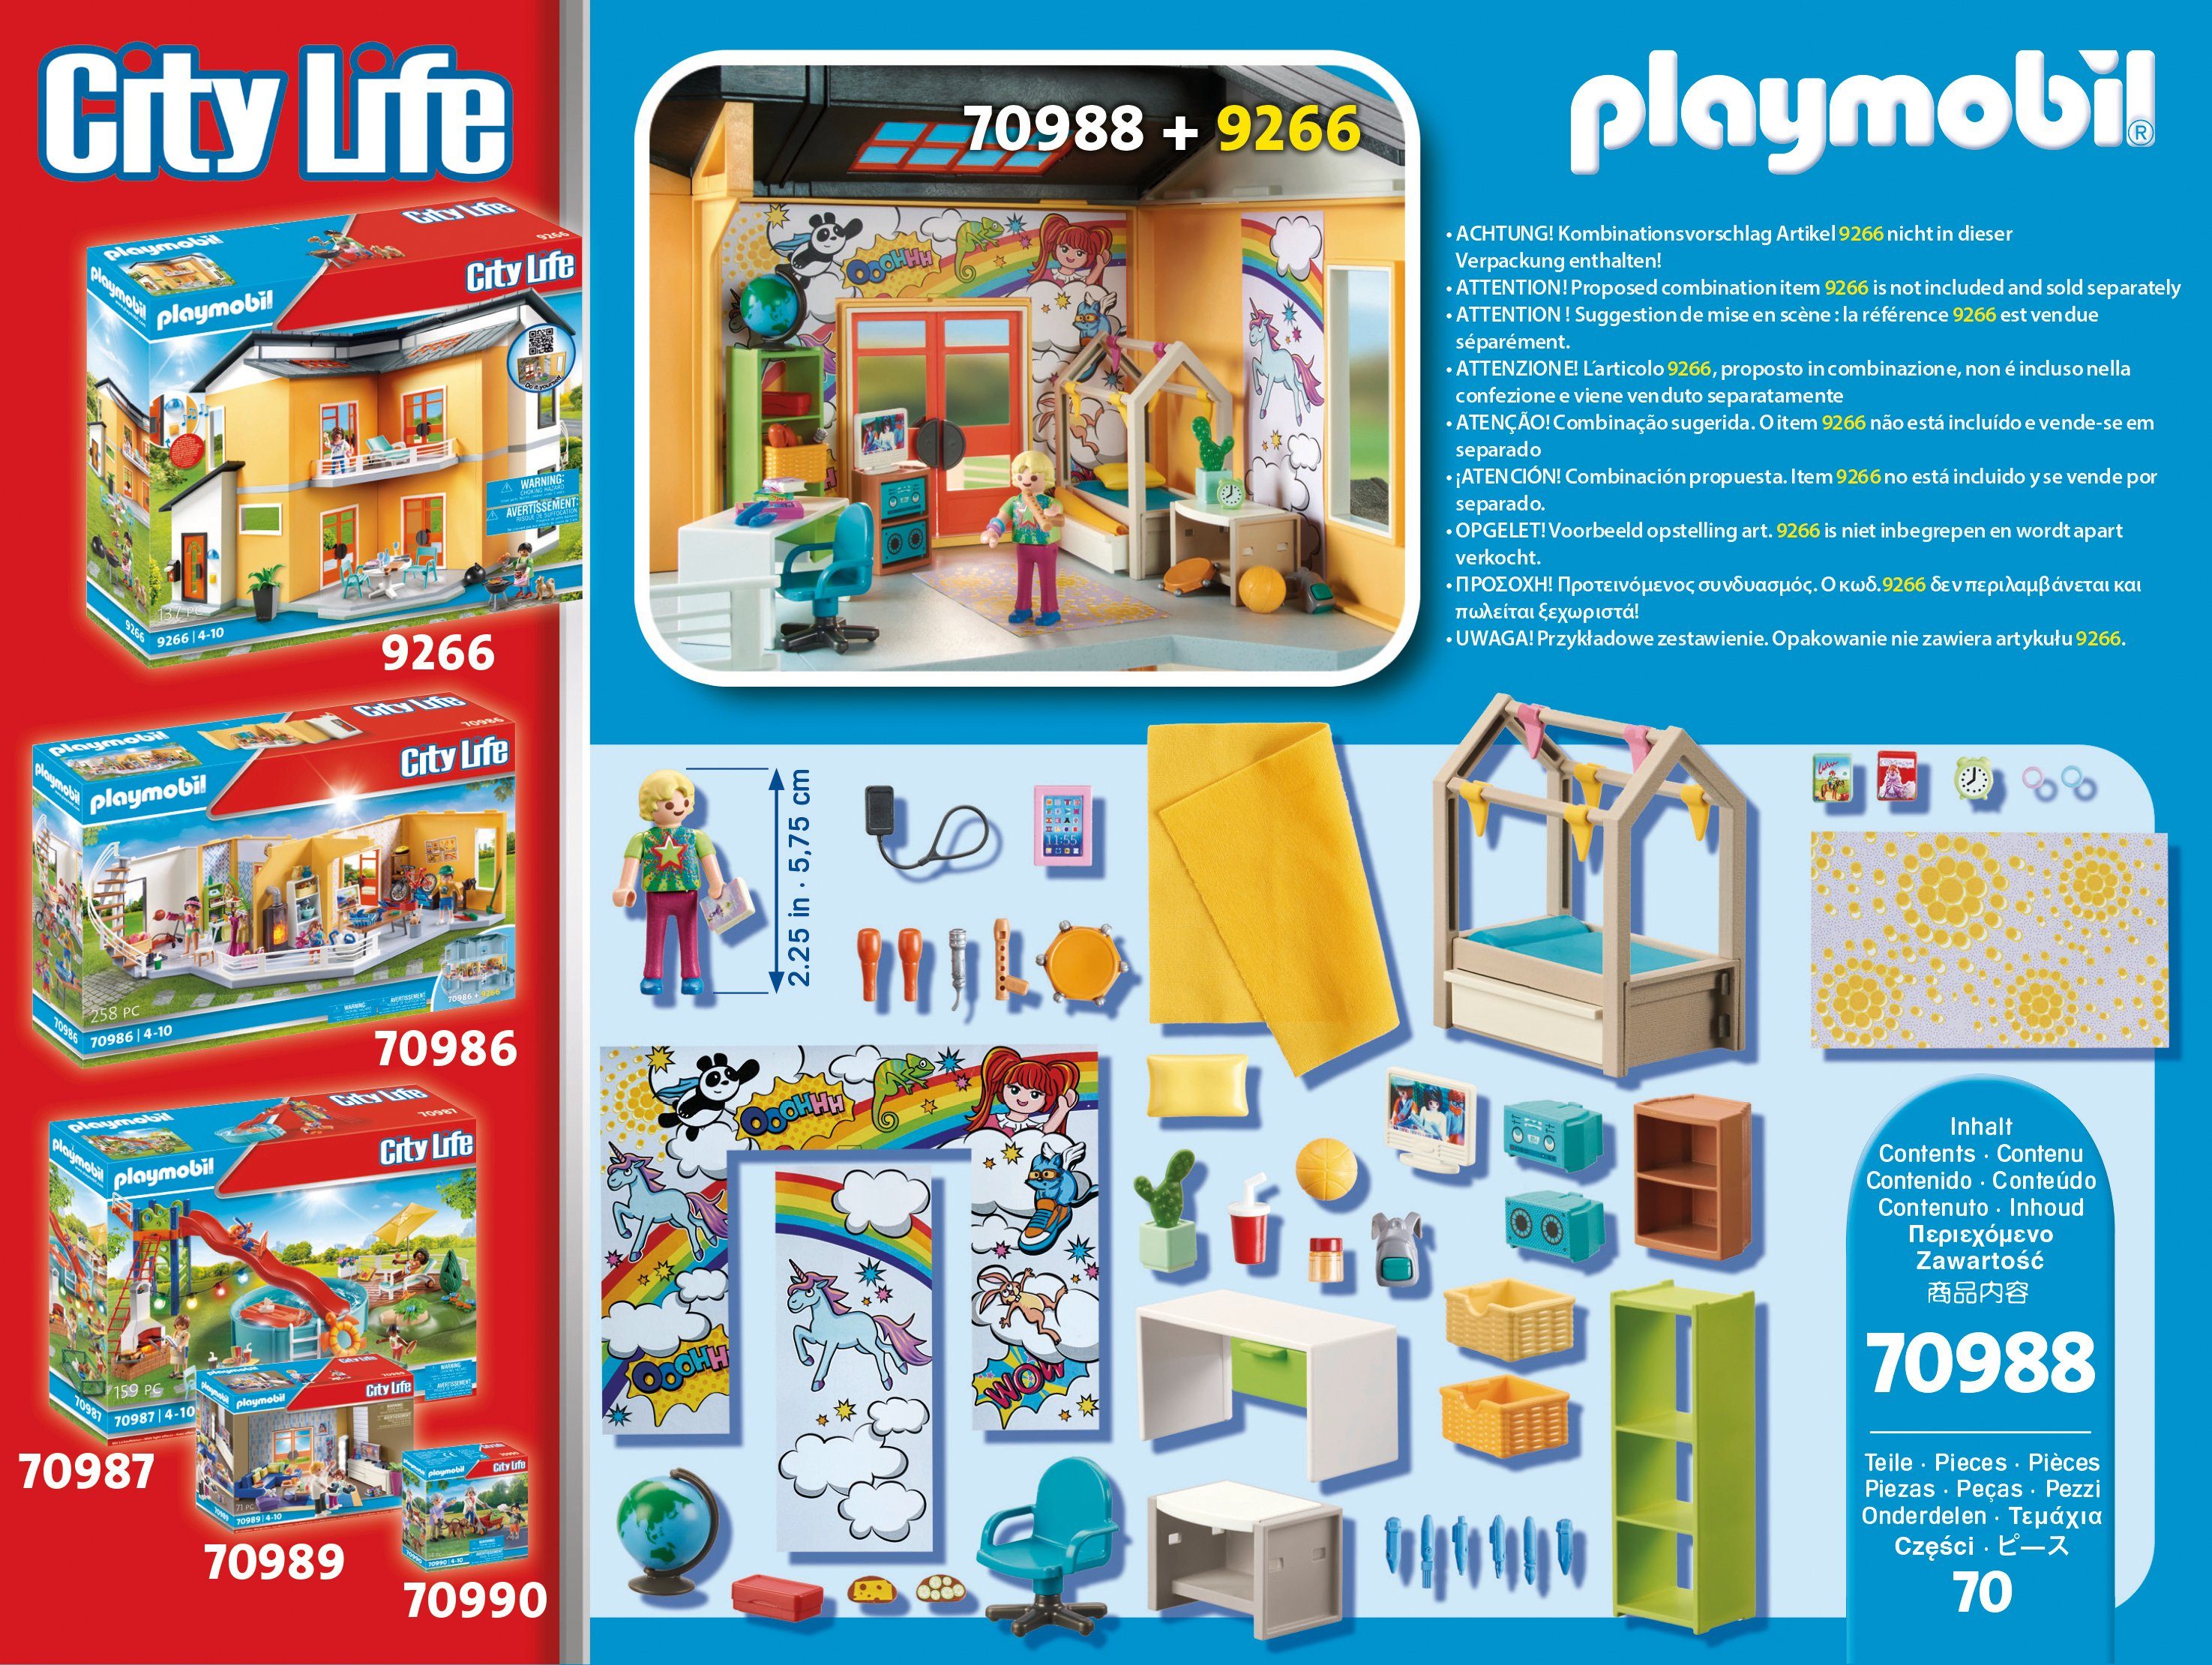 St), Jugendzimmer Made City (70988), in Konstruktions-Spielset Germany (70 Life, Playmobil®